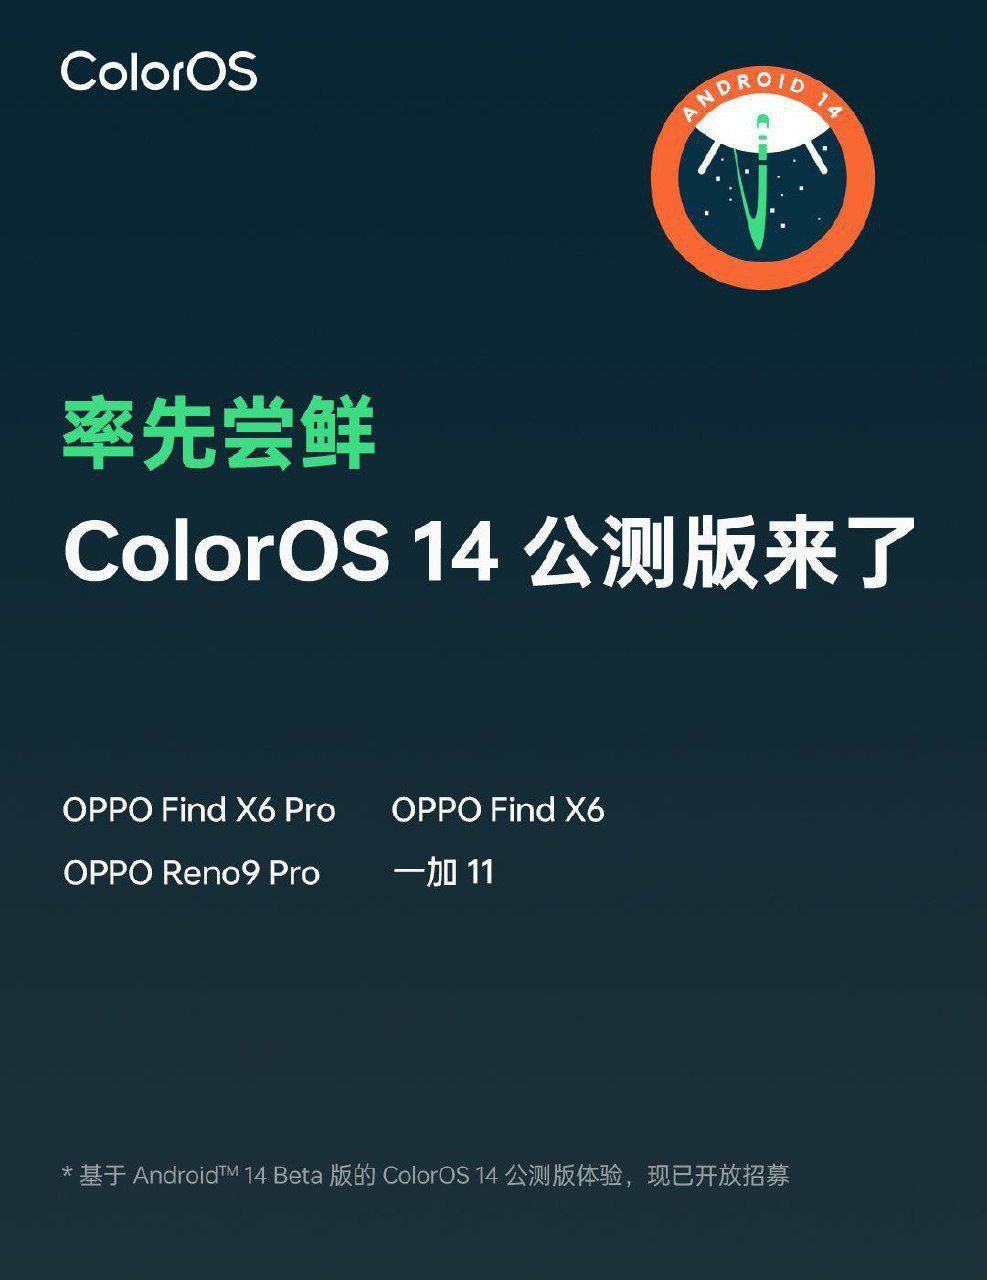 OPPO ColorOS 14 public beta devices